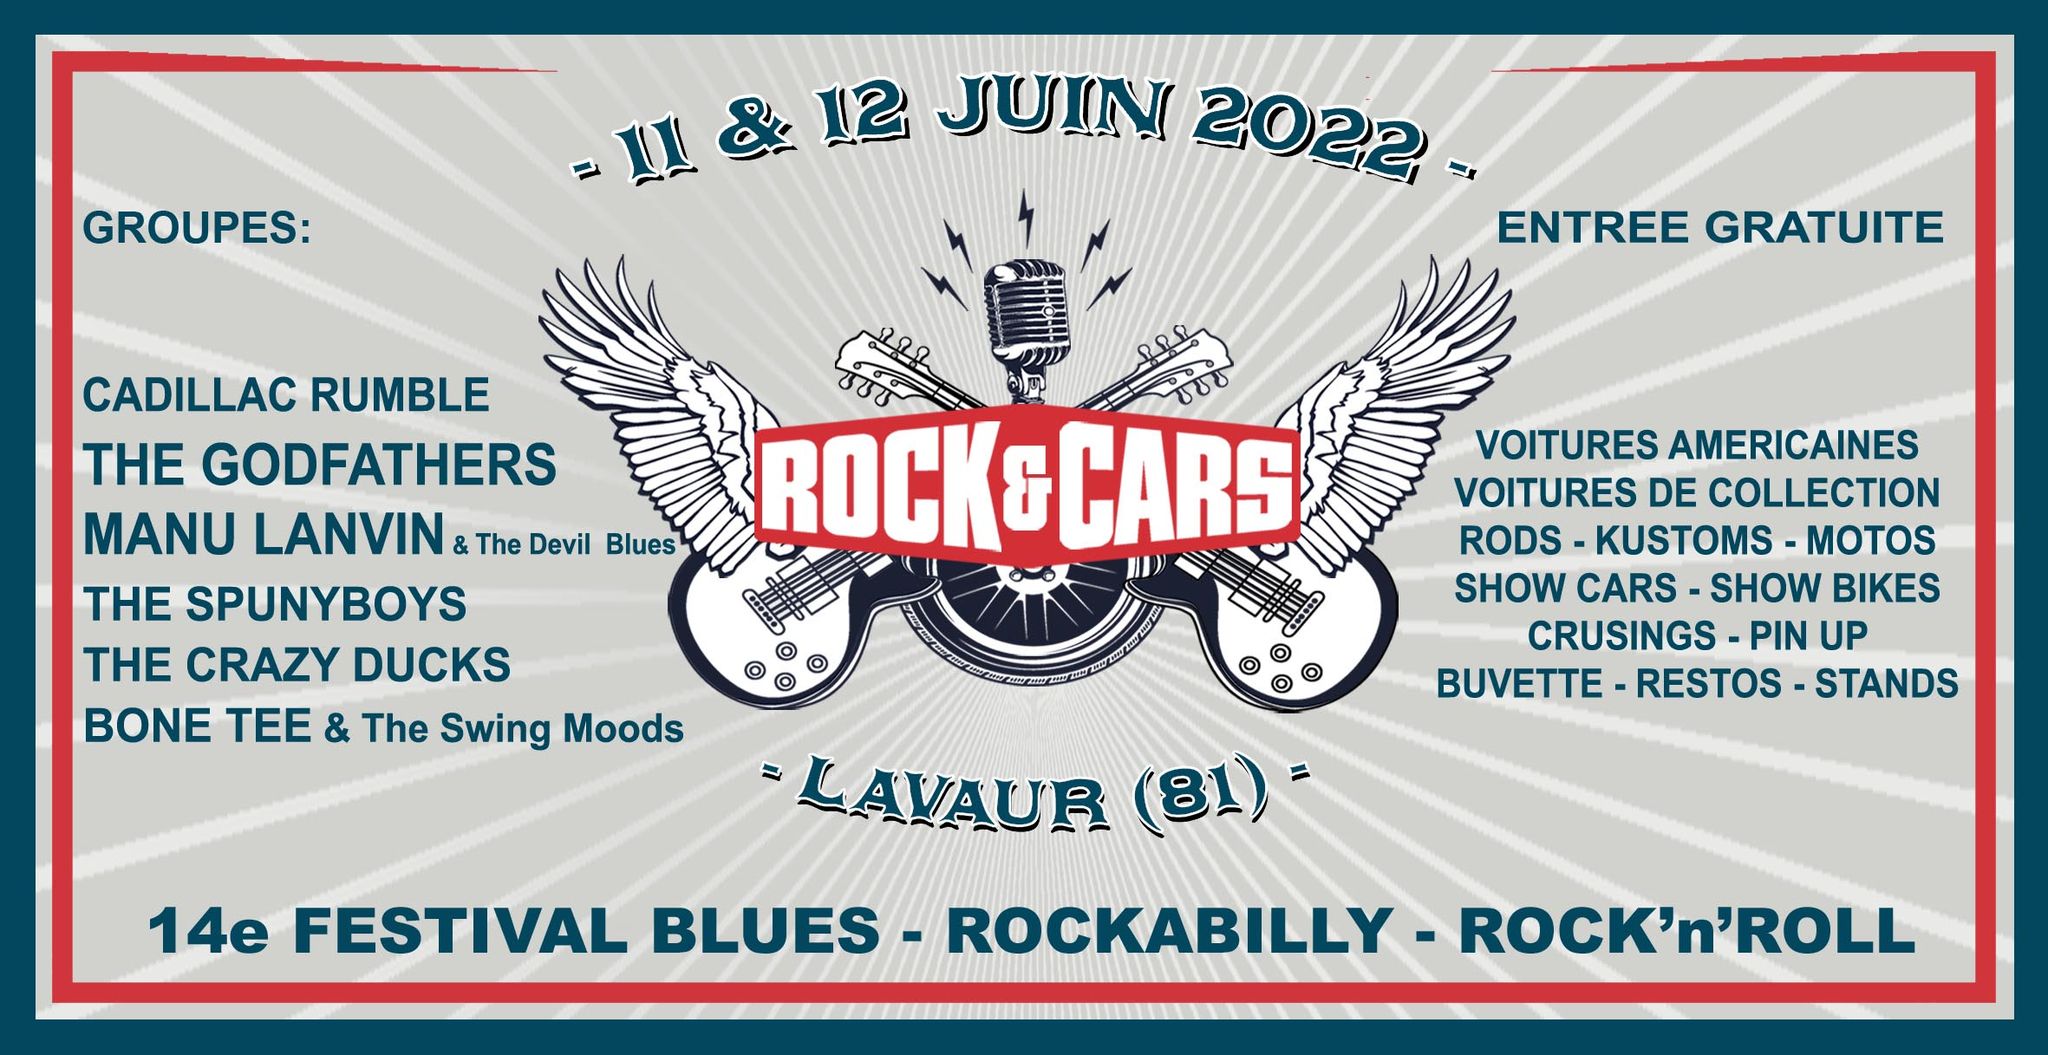 Rock'&'cars